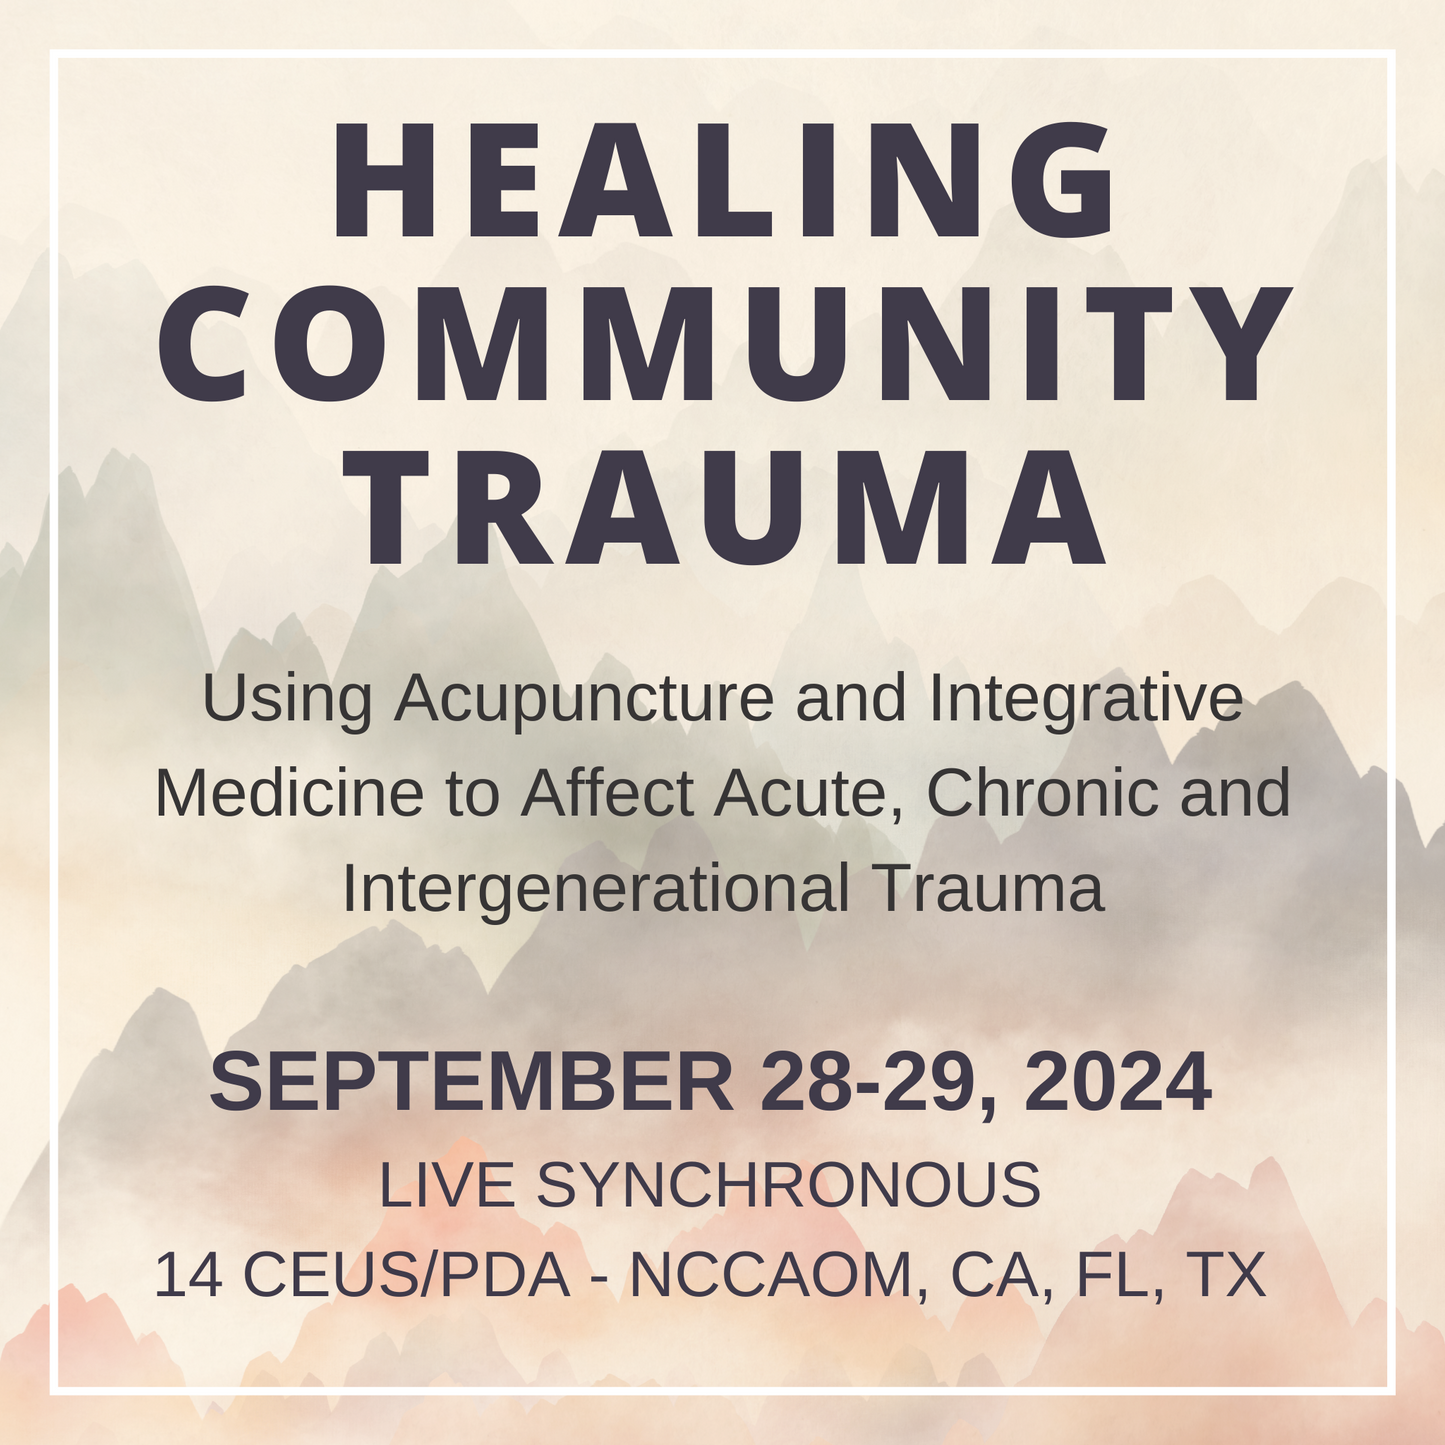 Healing Community Trauma | September 28-29, 2024 | Live Synchronous